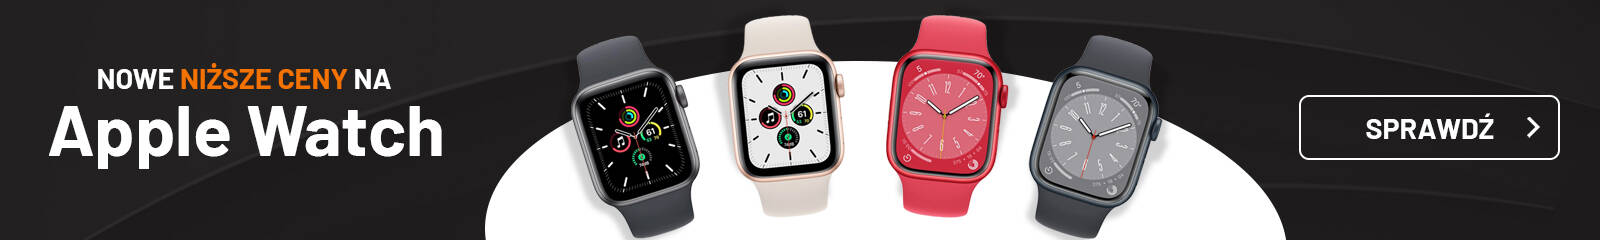 Apple Watch nowe niższe ceny